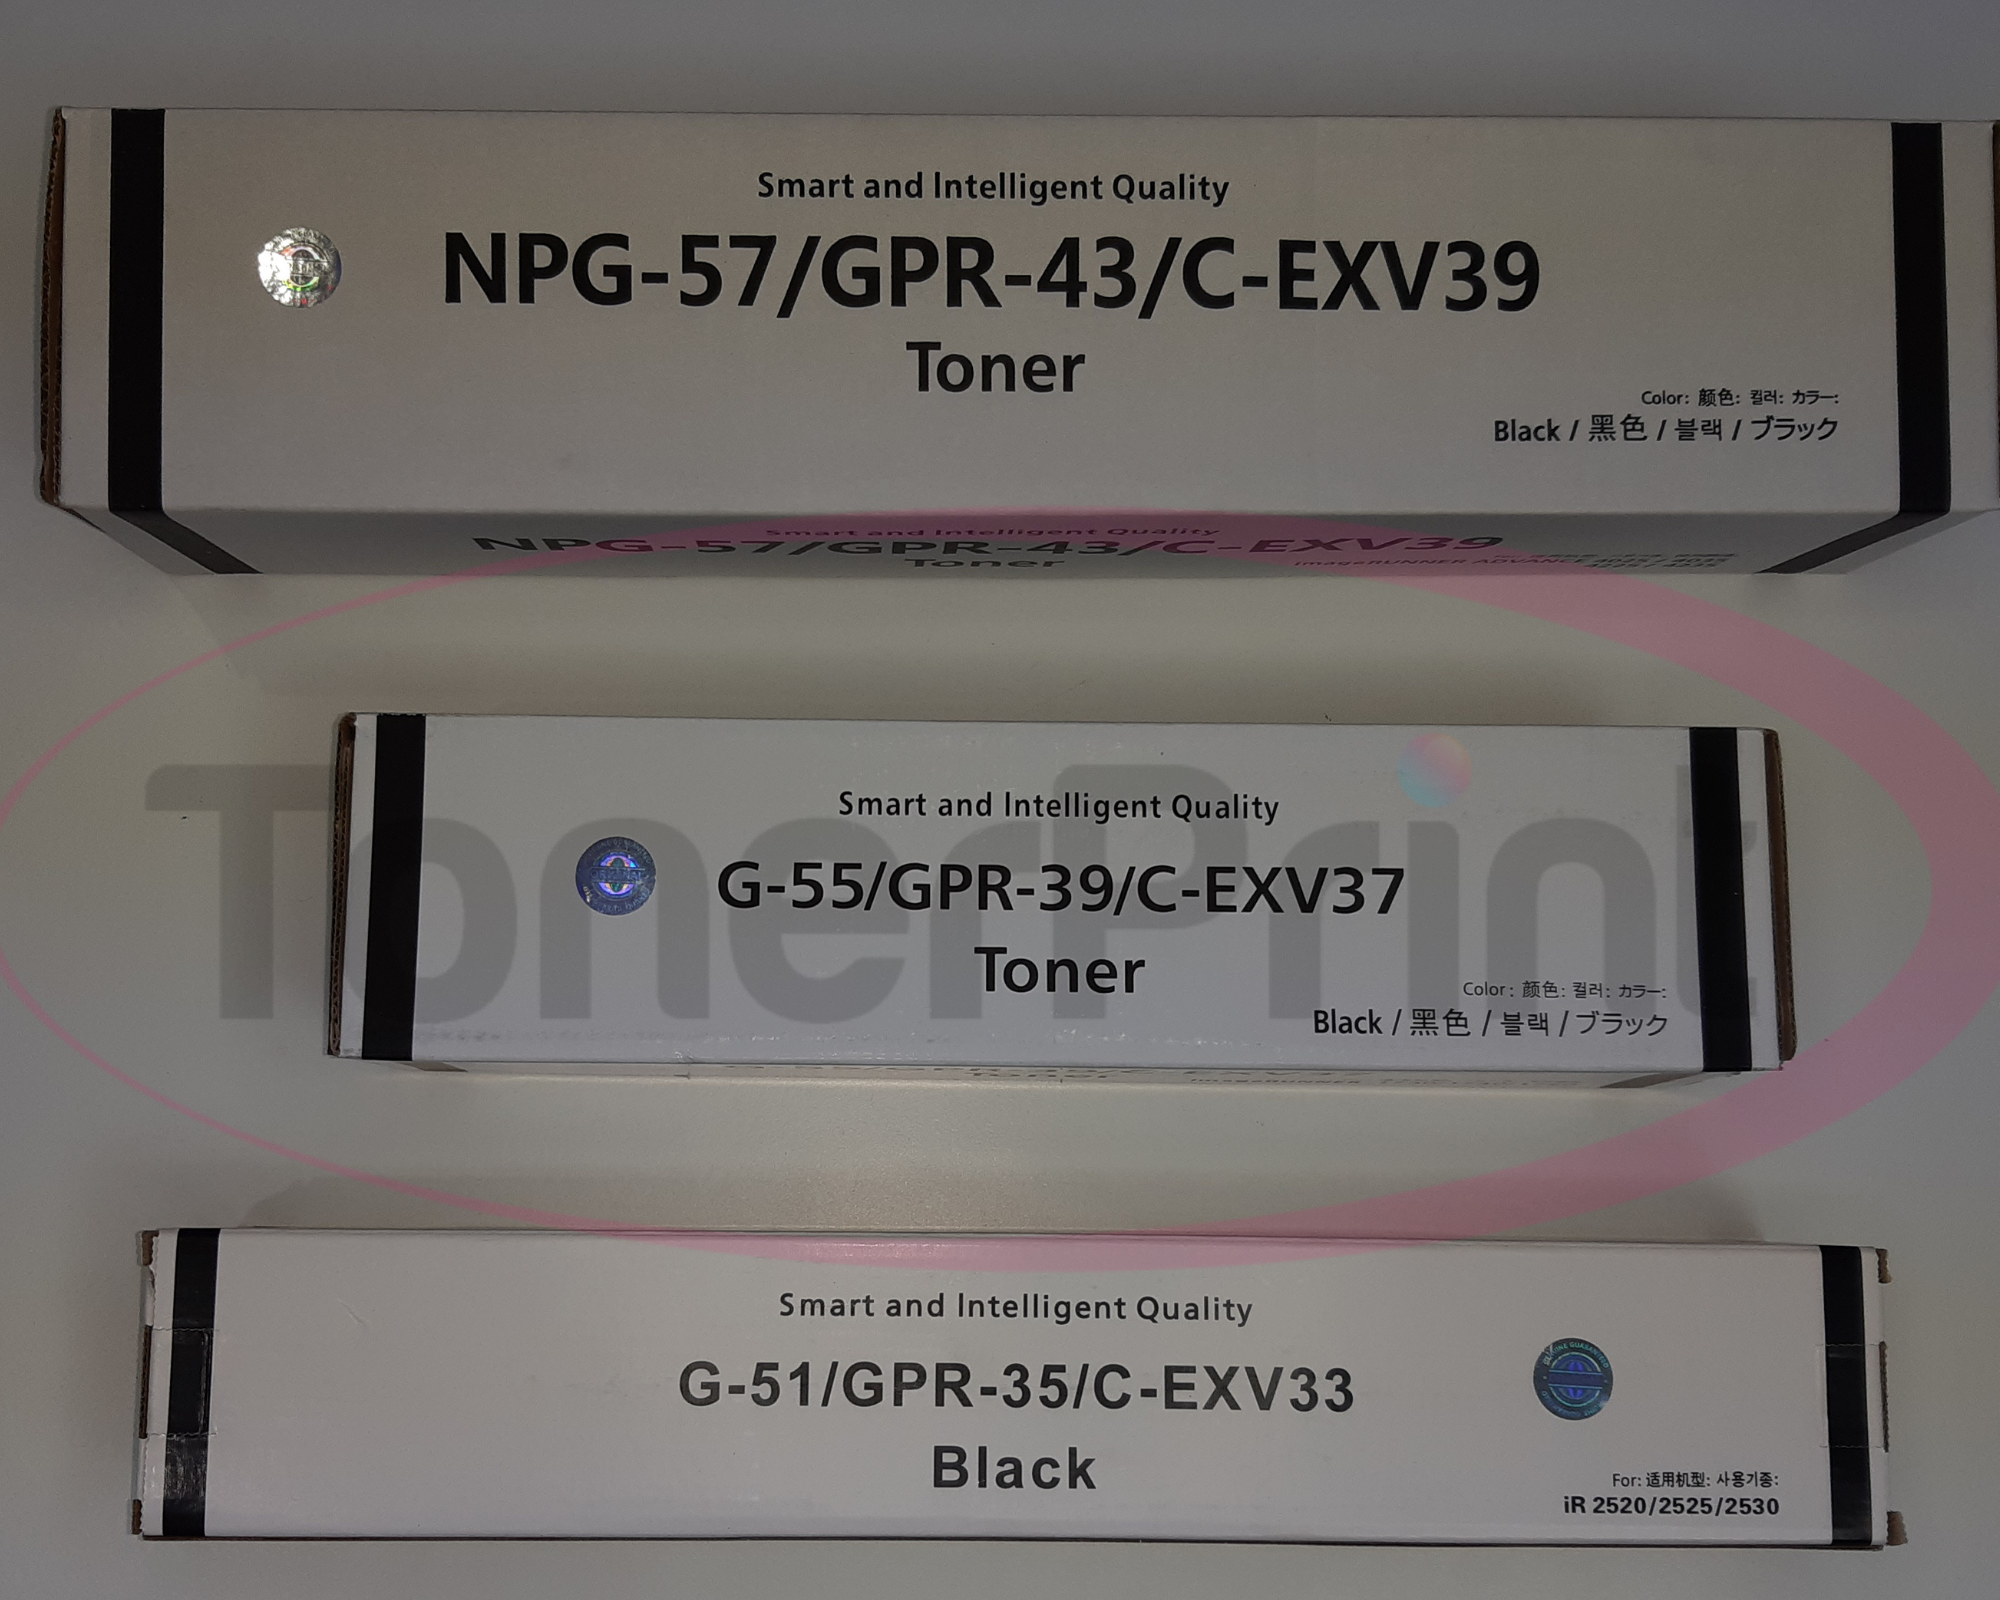 impresoras y scanners - TONER CANON GPR-43, GPR-39, GPR-35.